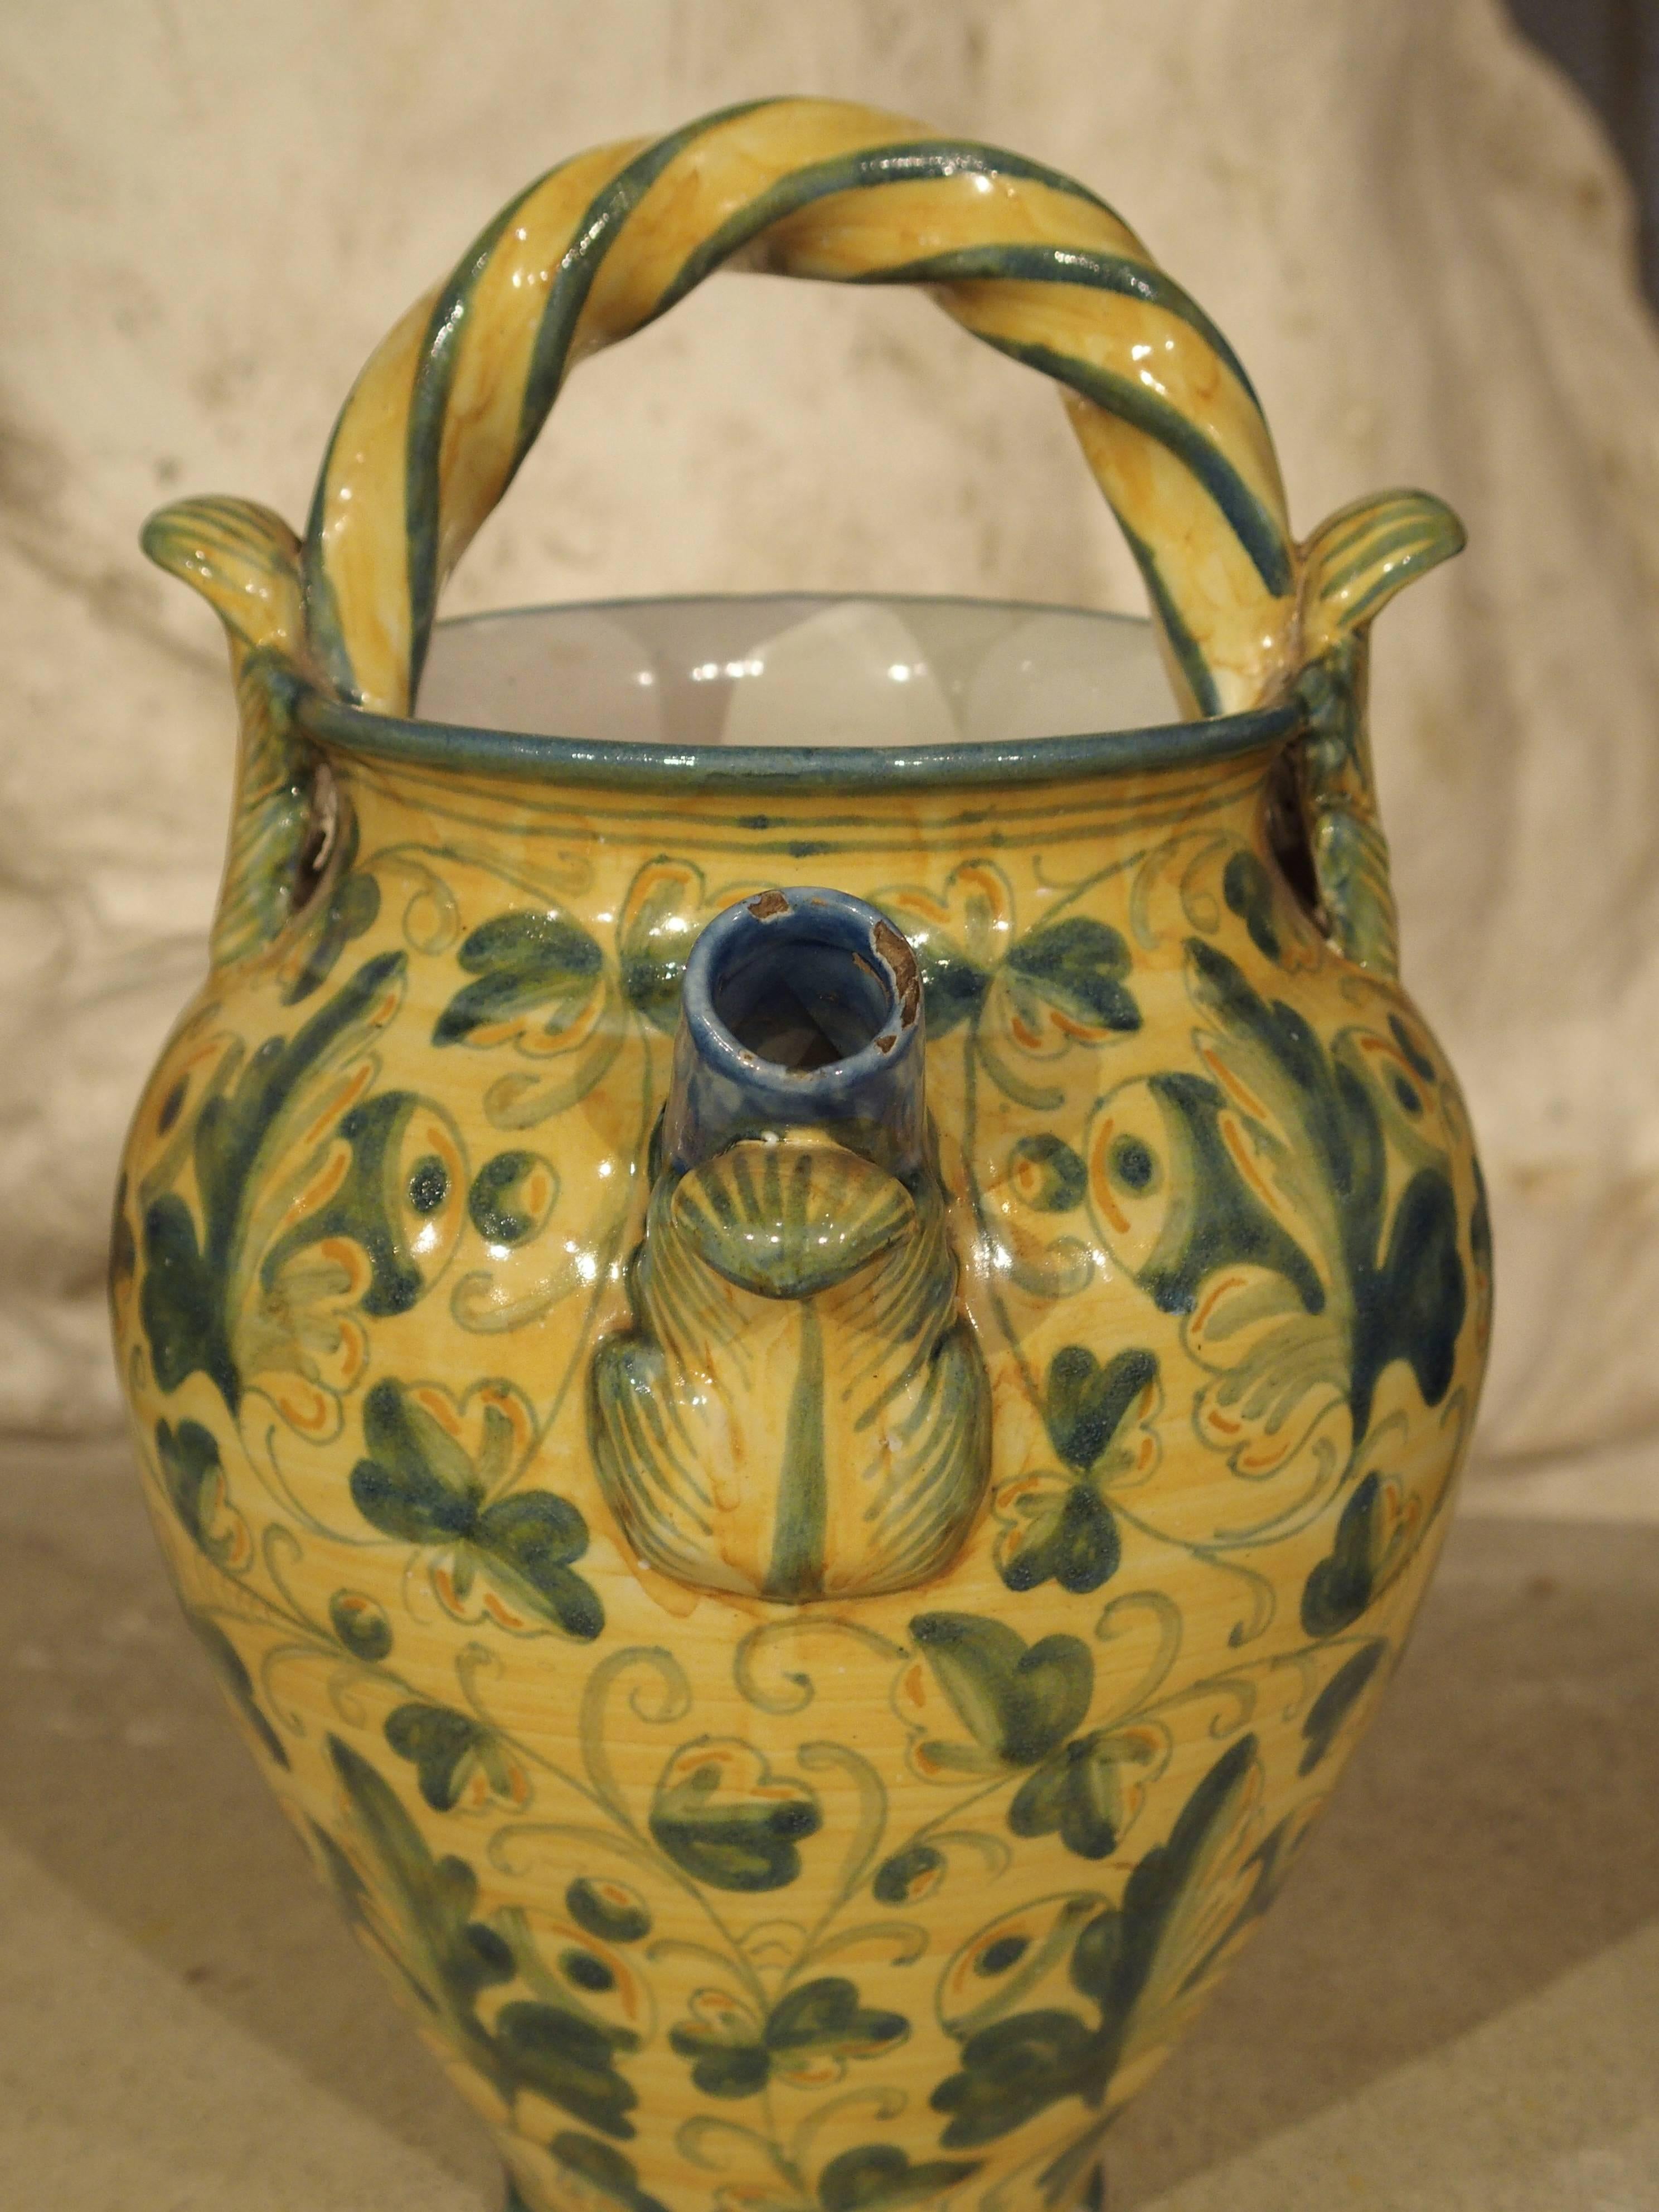 Ceramic Antique Majolica Apothecary Jar from Italy, 19th Century